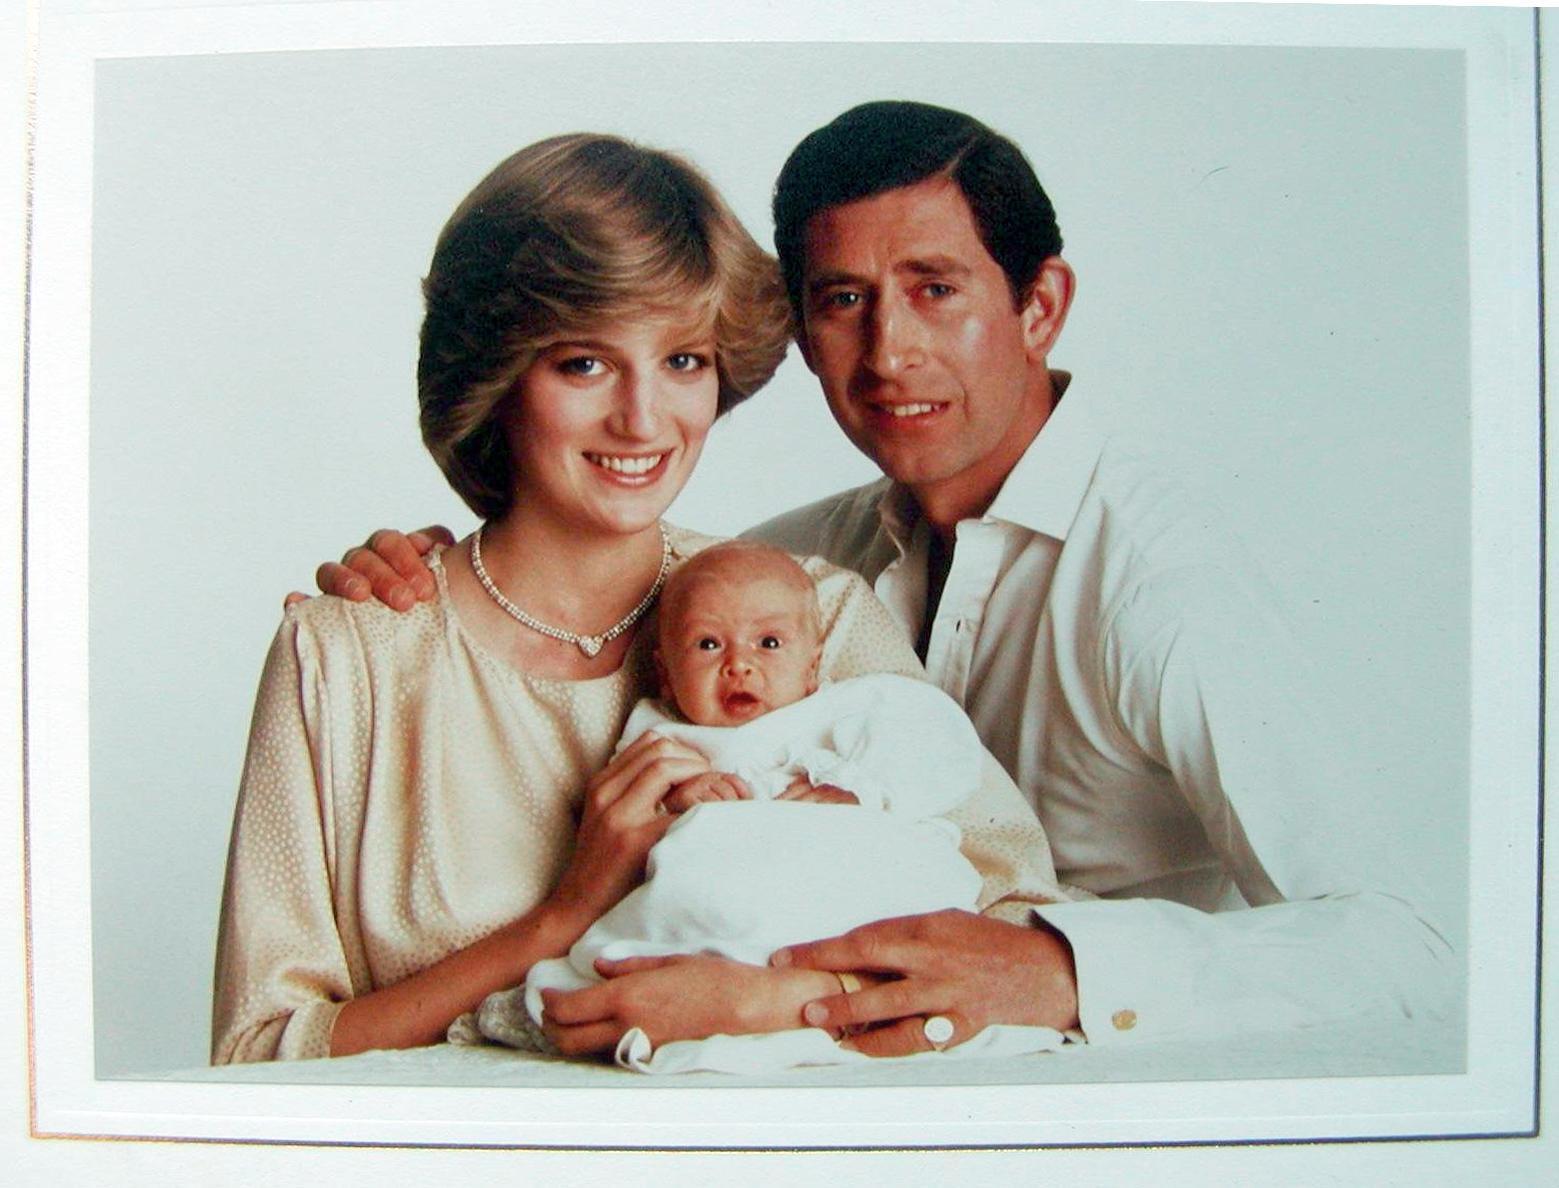 Charles and Diana Christmas card